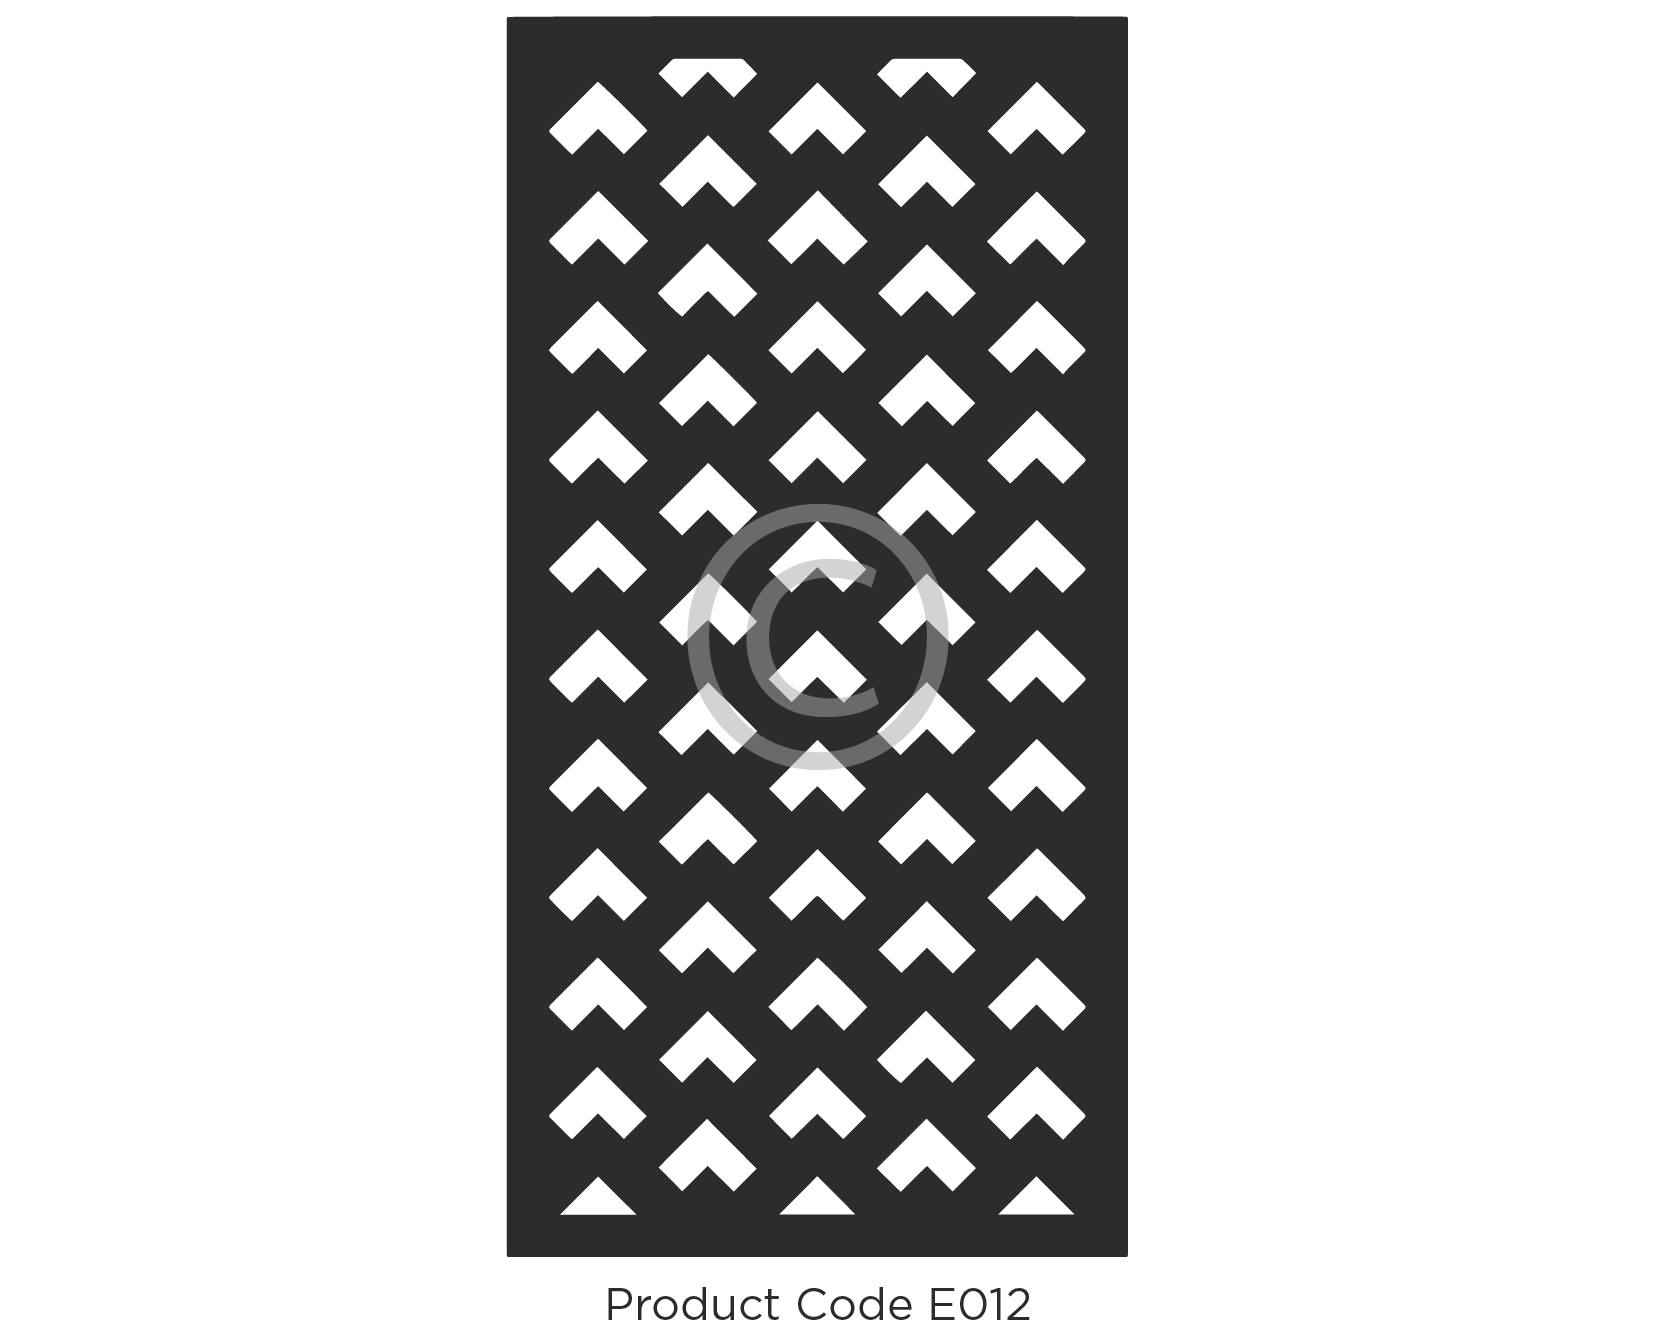 Elysium Decorative Screen Product Code E012 Geometric Design of right angle pattern